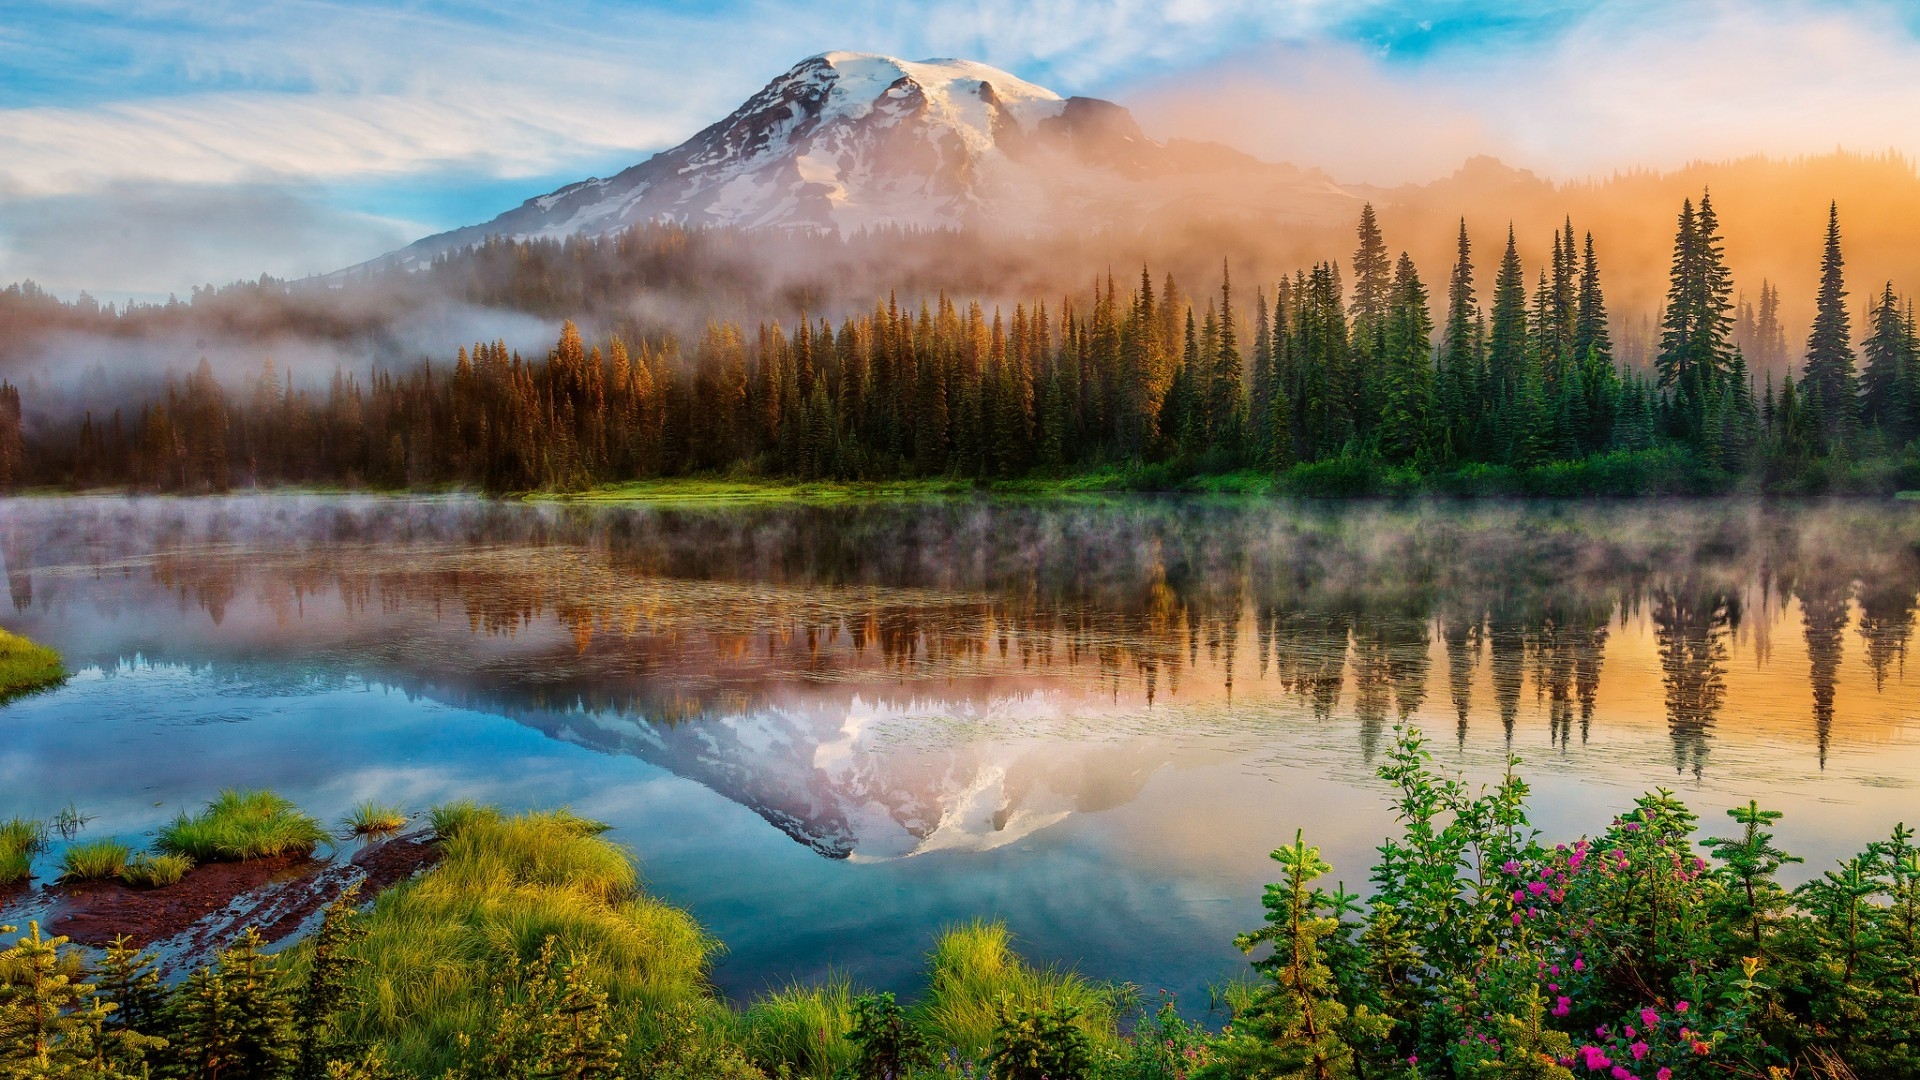 Mount Rainier Landscape for 1920 x 1080 HDTV 1080p resolution